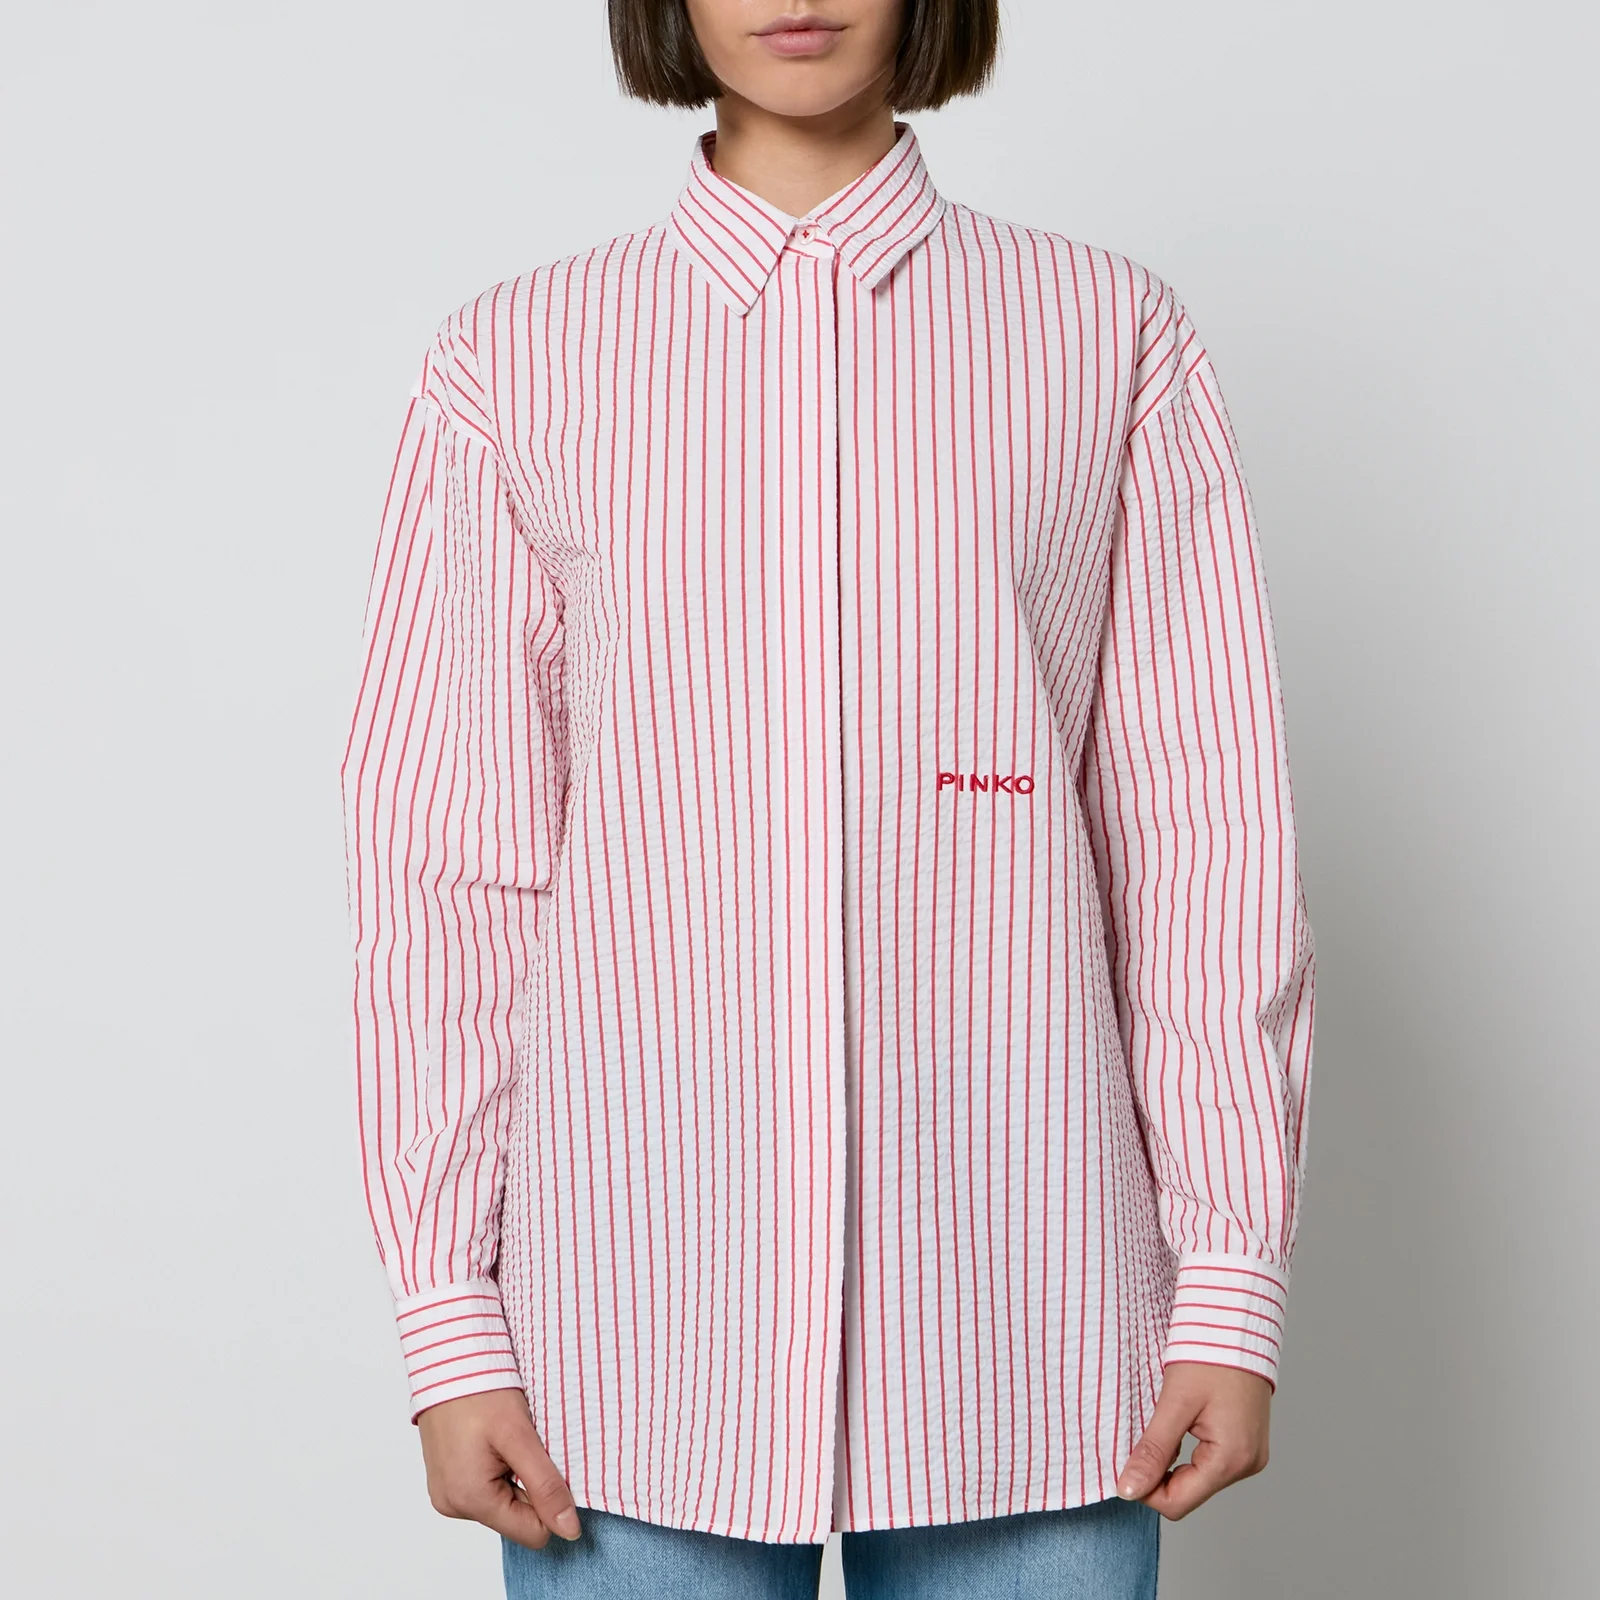 Pinko Bridport 1 Rigato Striped Seersucker Shirt Image 1